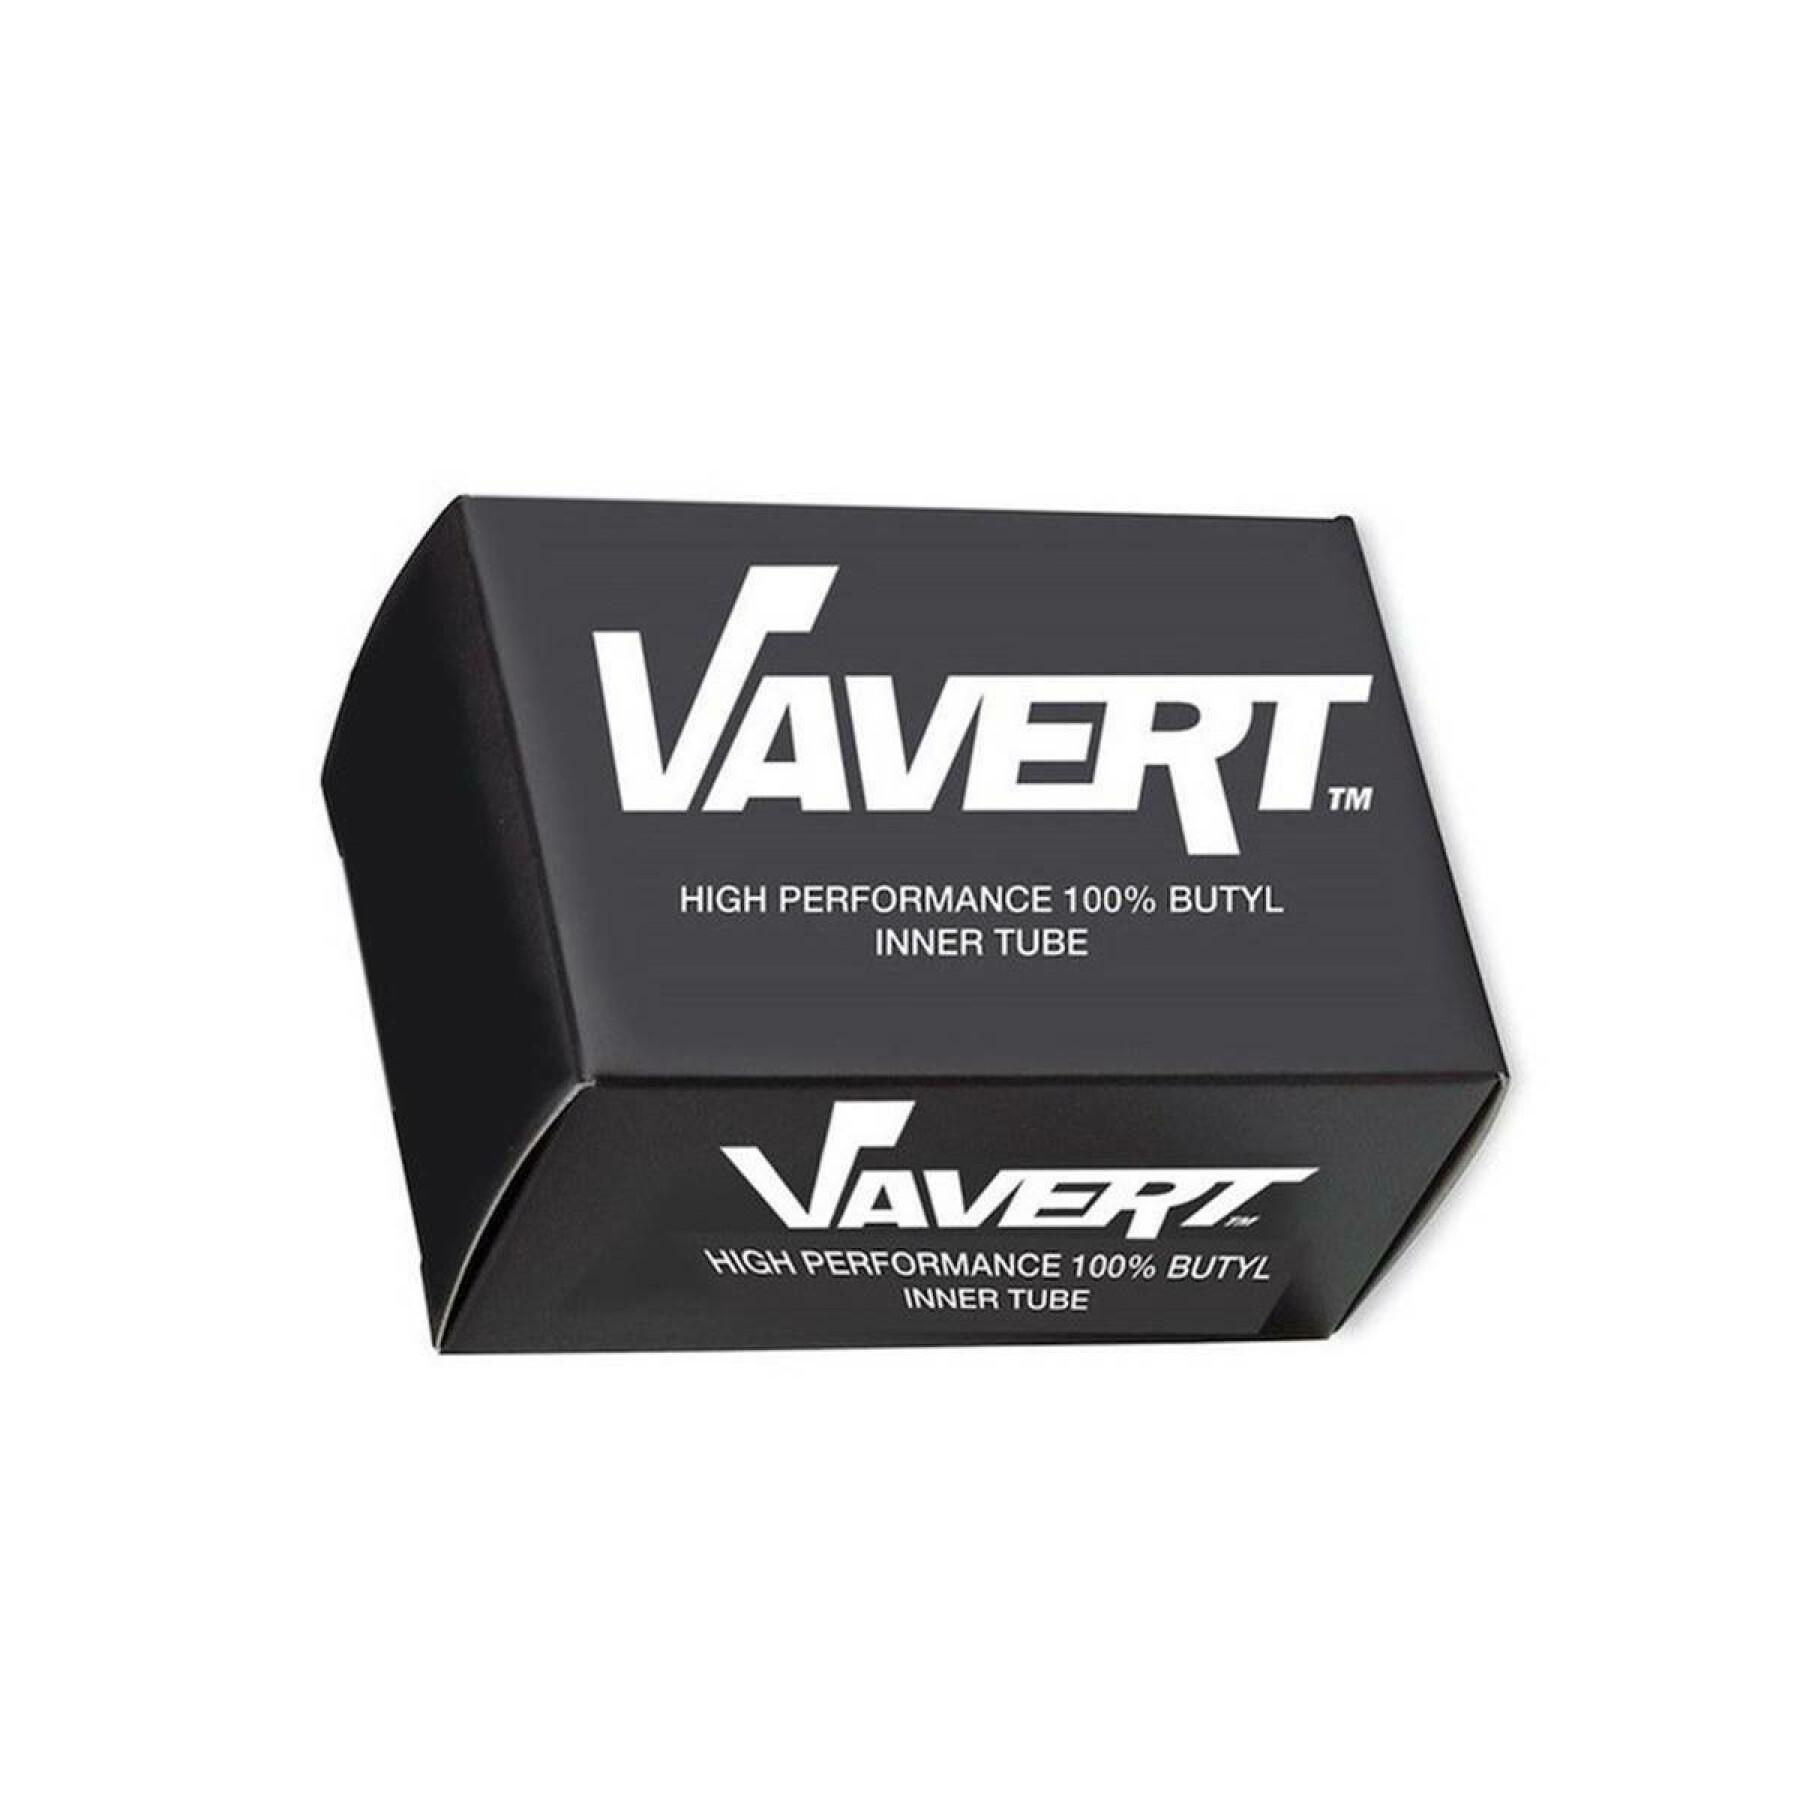 Válvula schrader de la cámara de aire Vavert 14